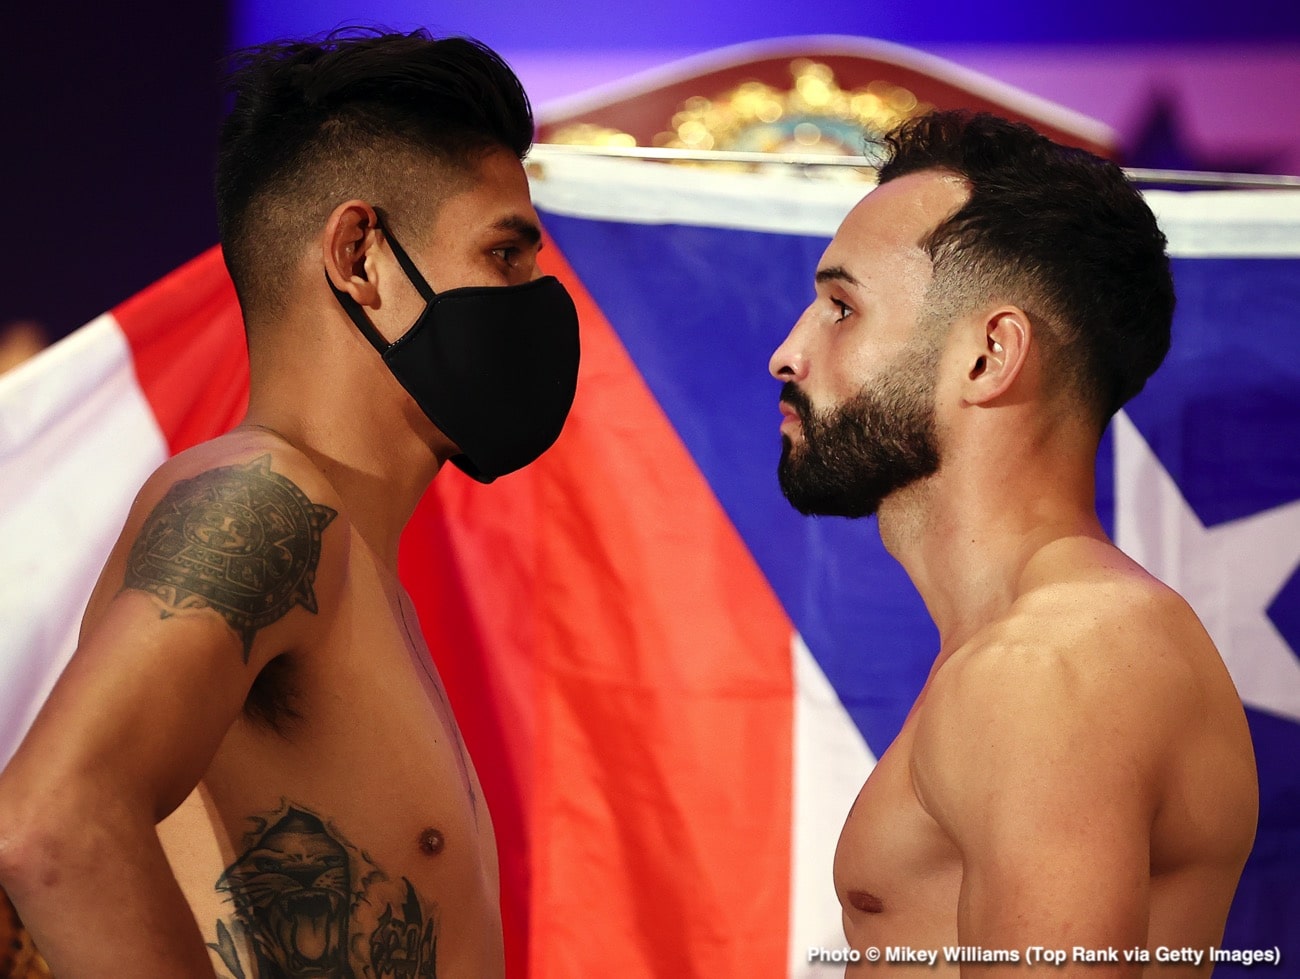 Edgar Berlanga vs. Demond Nicholson & Emanuel Navarrete vs Chistopher Diaz - official weights